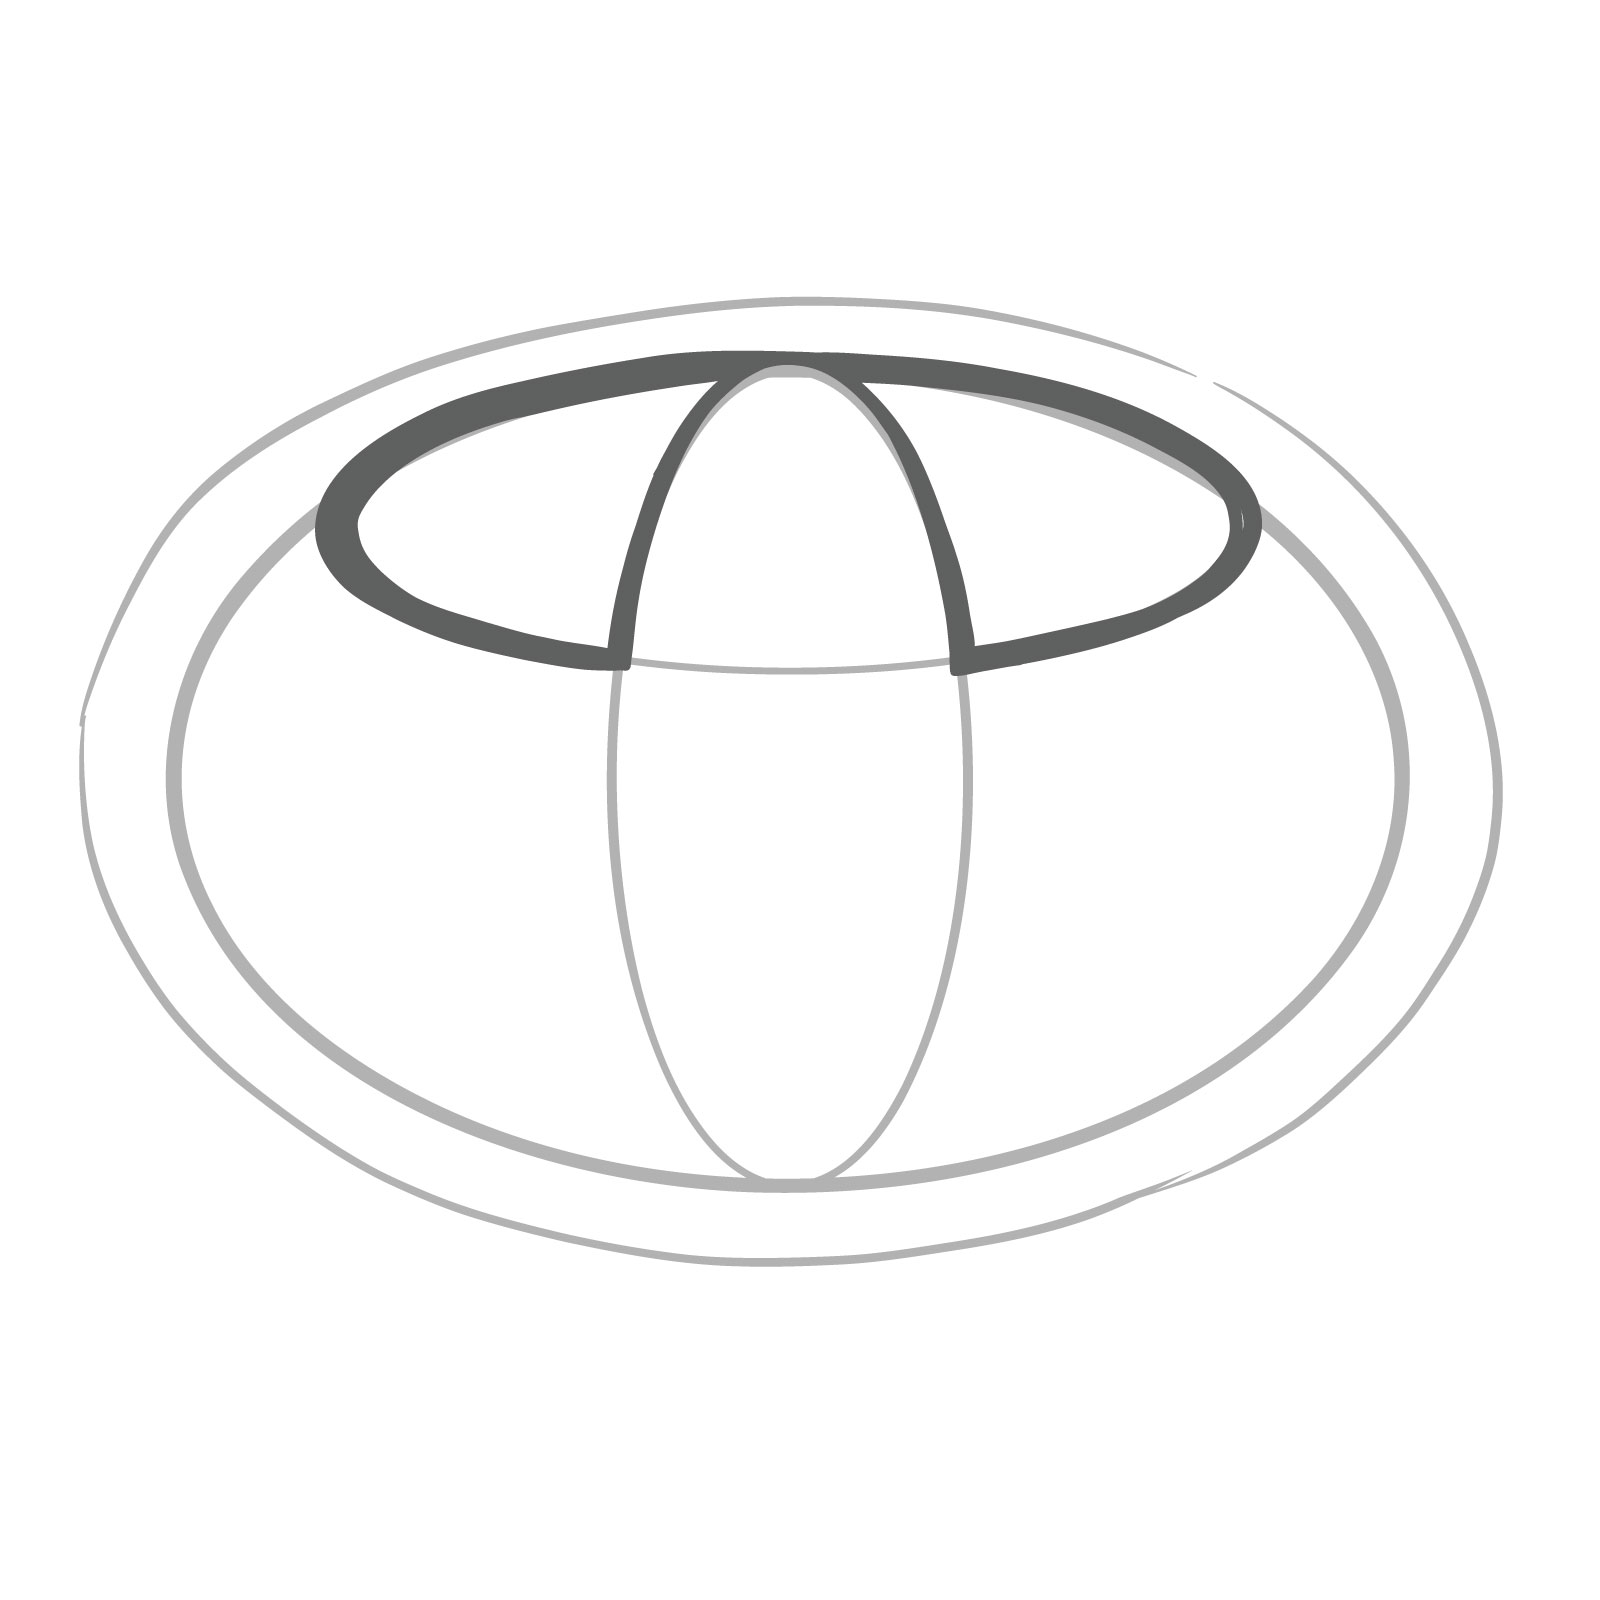 How to draw a Toyota logo - step 05